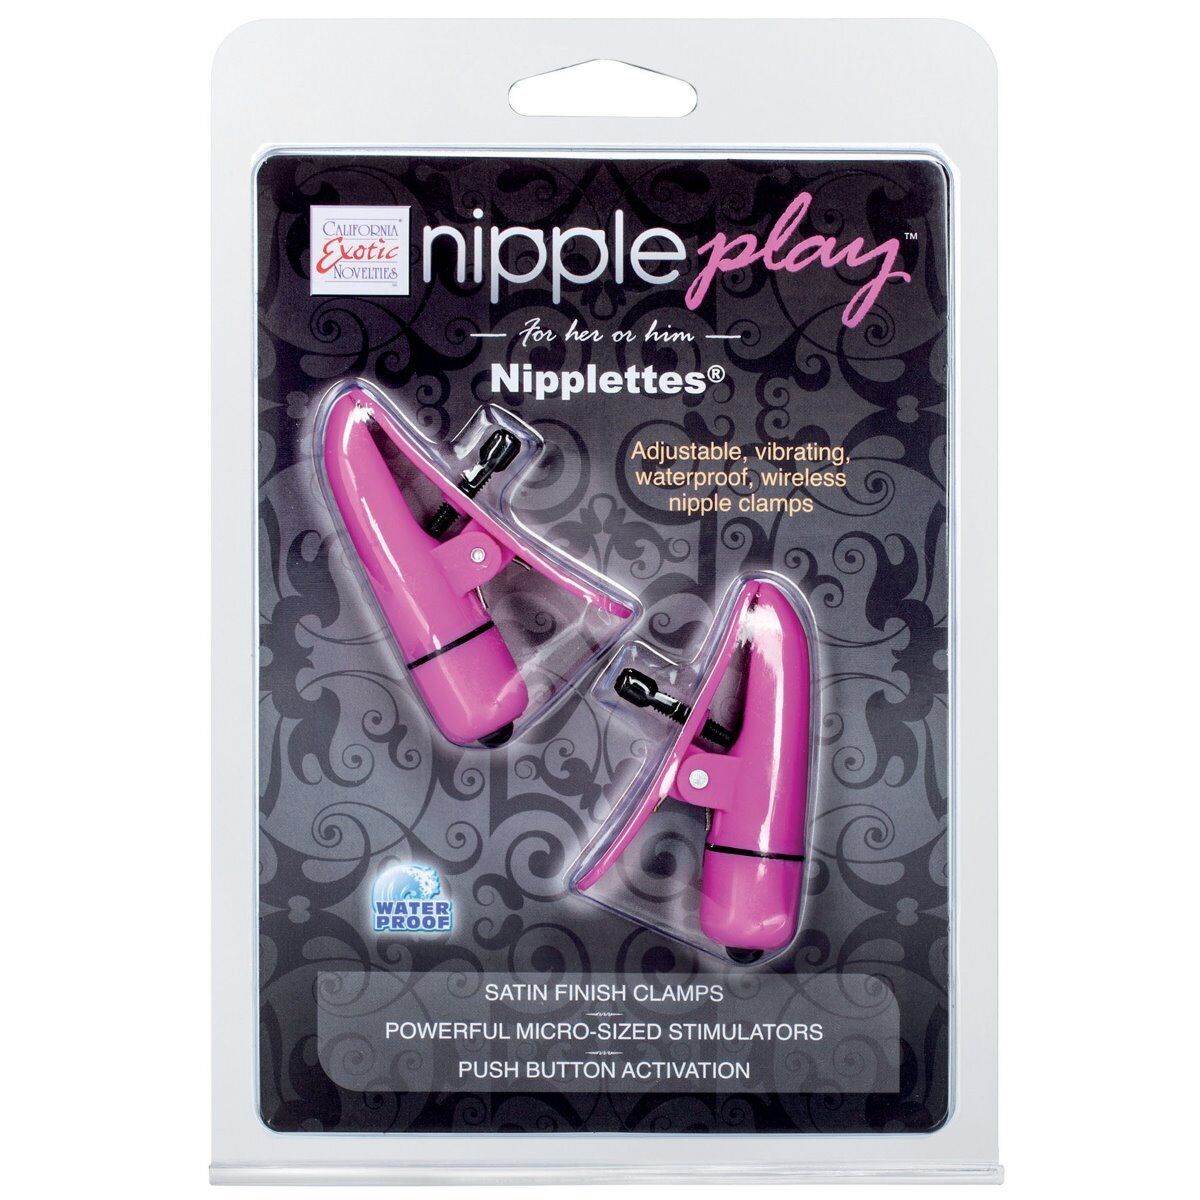 Wireless Cordless Vibrating Nipple Clamps Breast Nipple Play SM Bondage Sex Toy